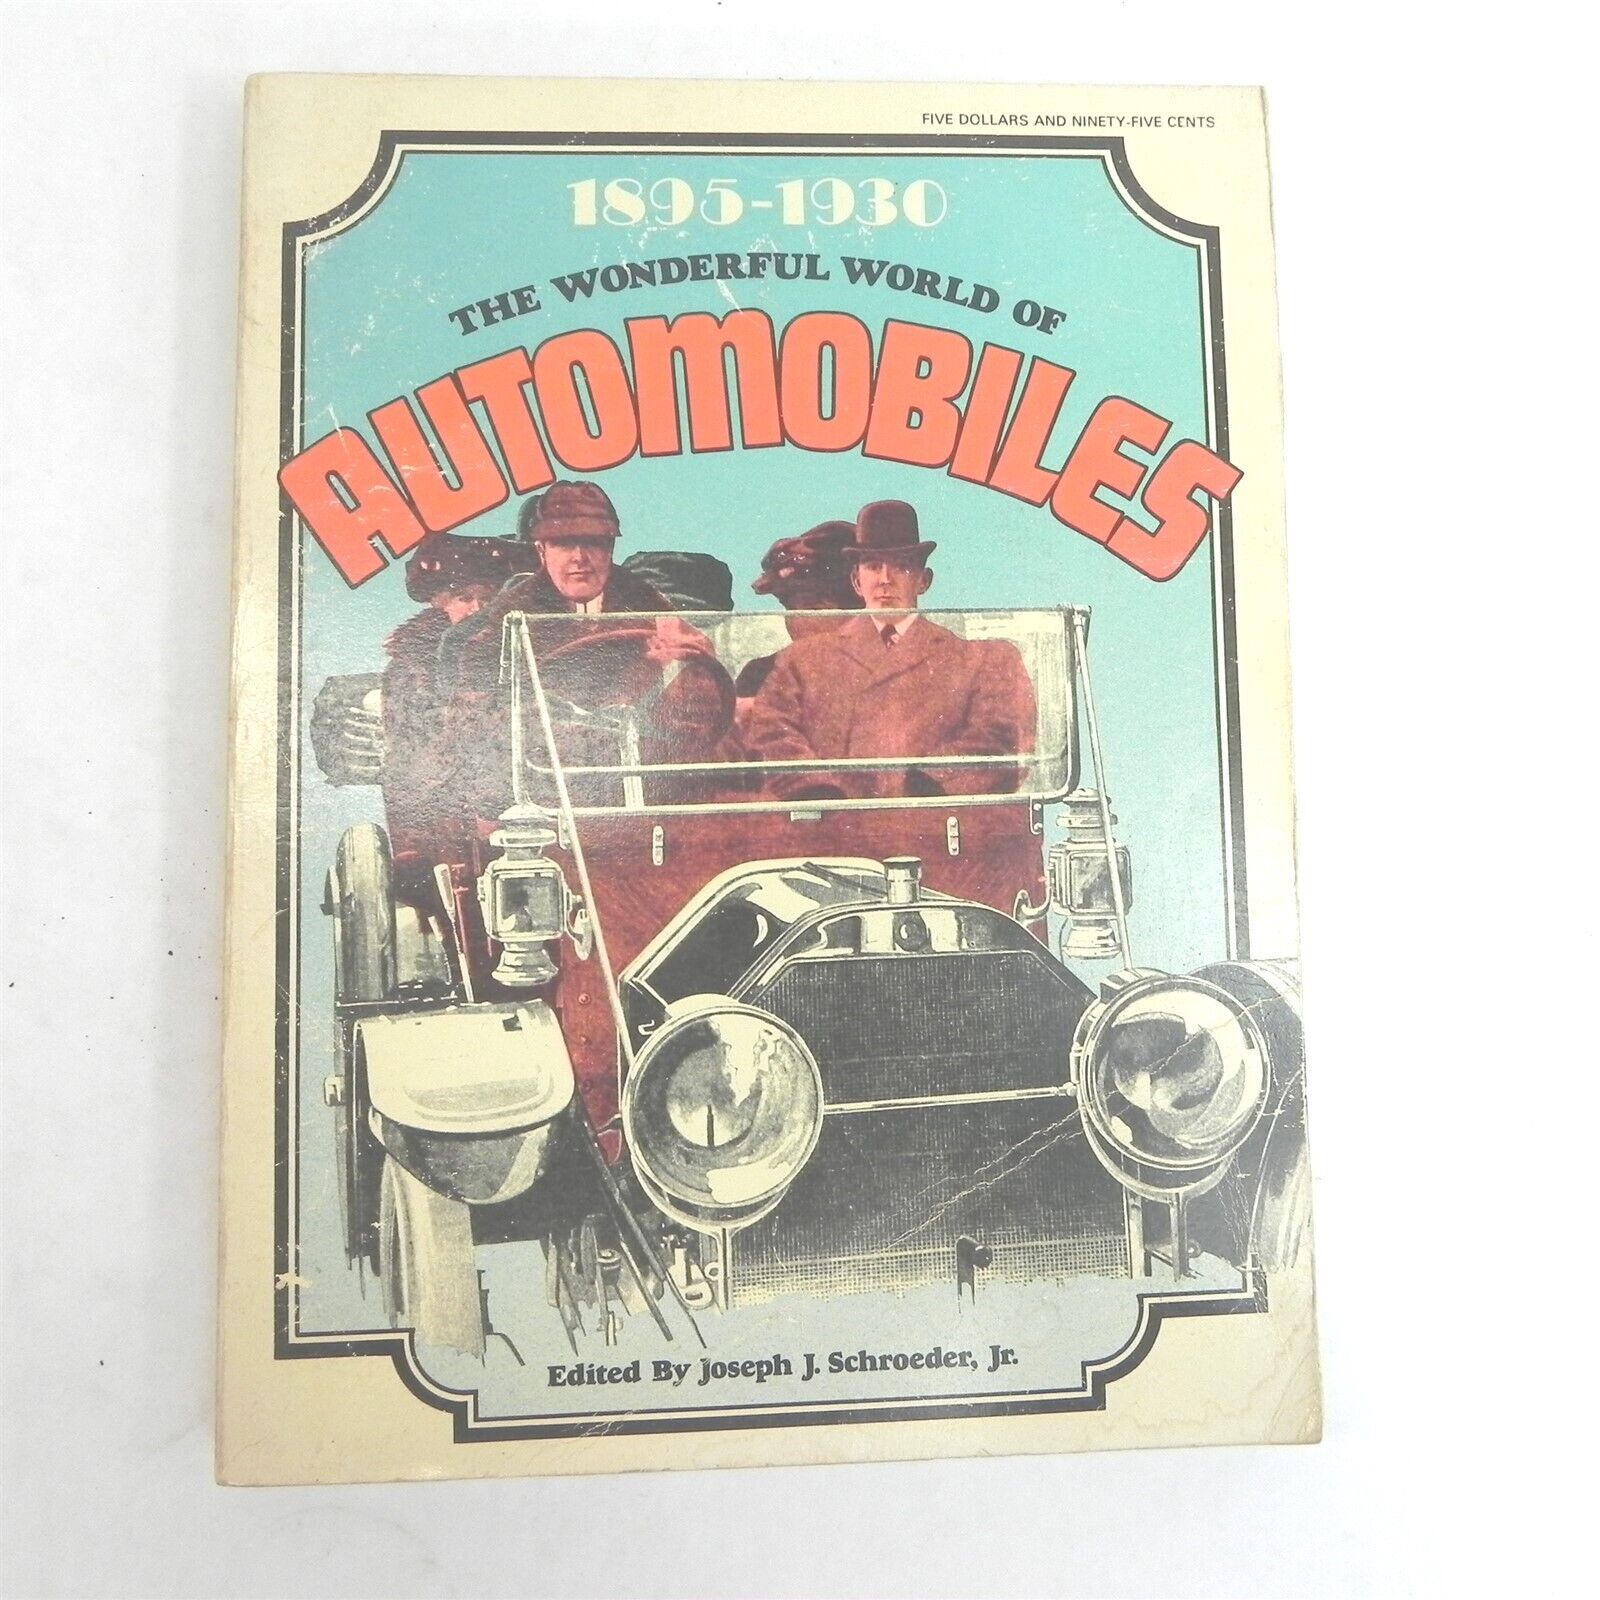 VINTAGE THE WONDERFUL WORLD OF AUTOMOBILES 1895-1930 BY JOSEPH SCHROEDER JR BOOK